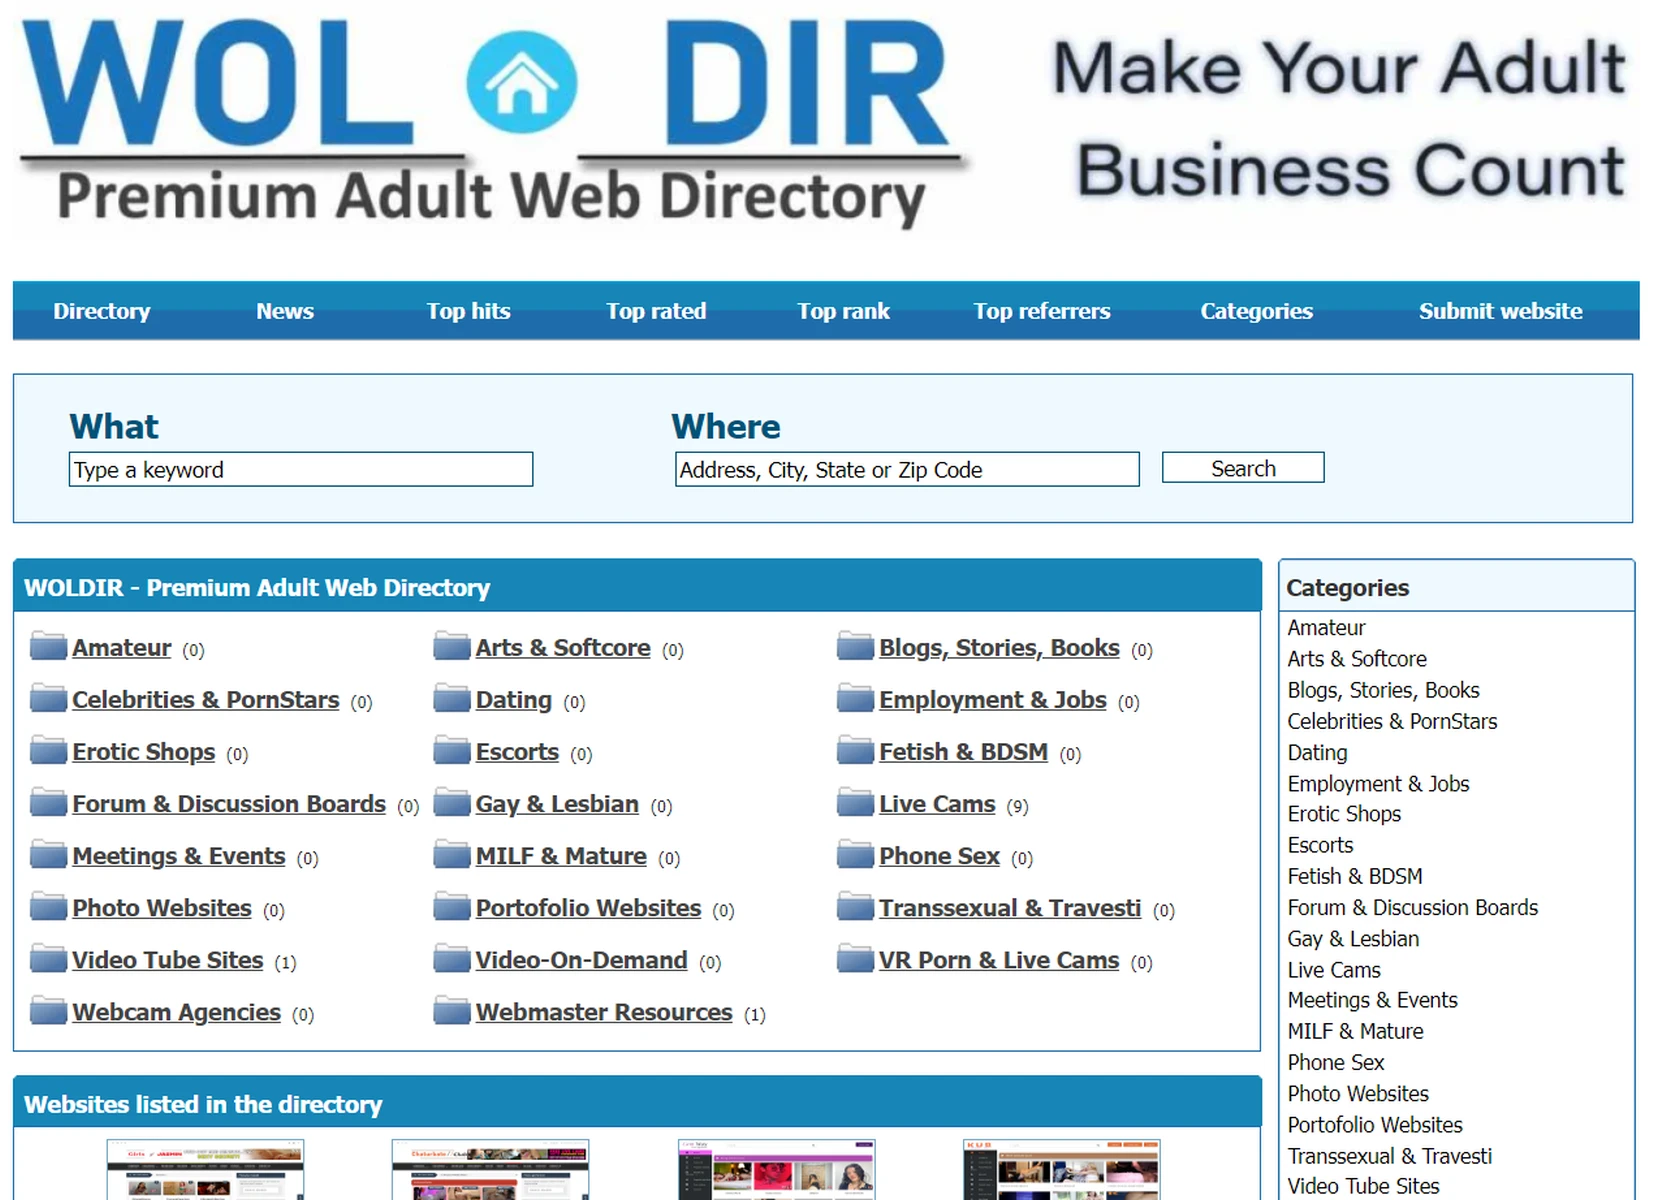 WOLDIR - Premium Adult Web Directory